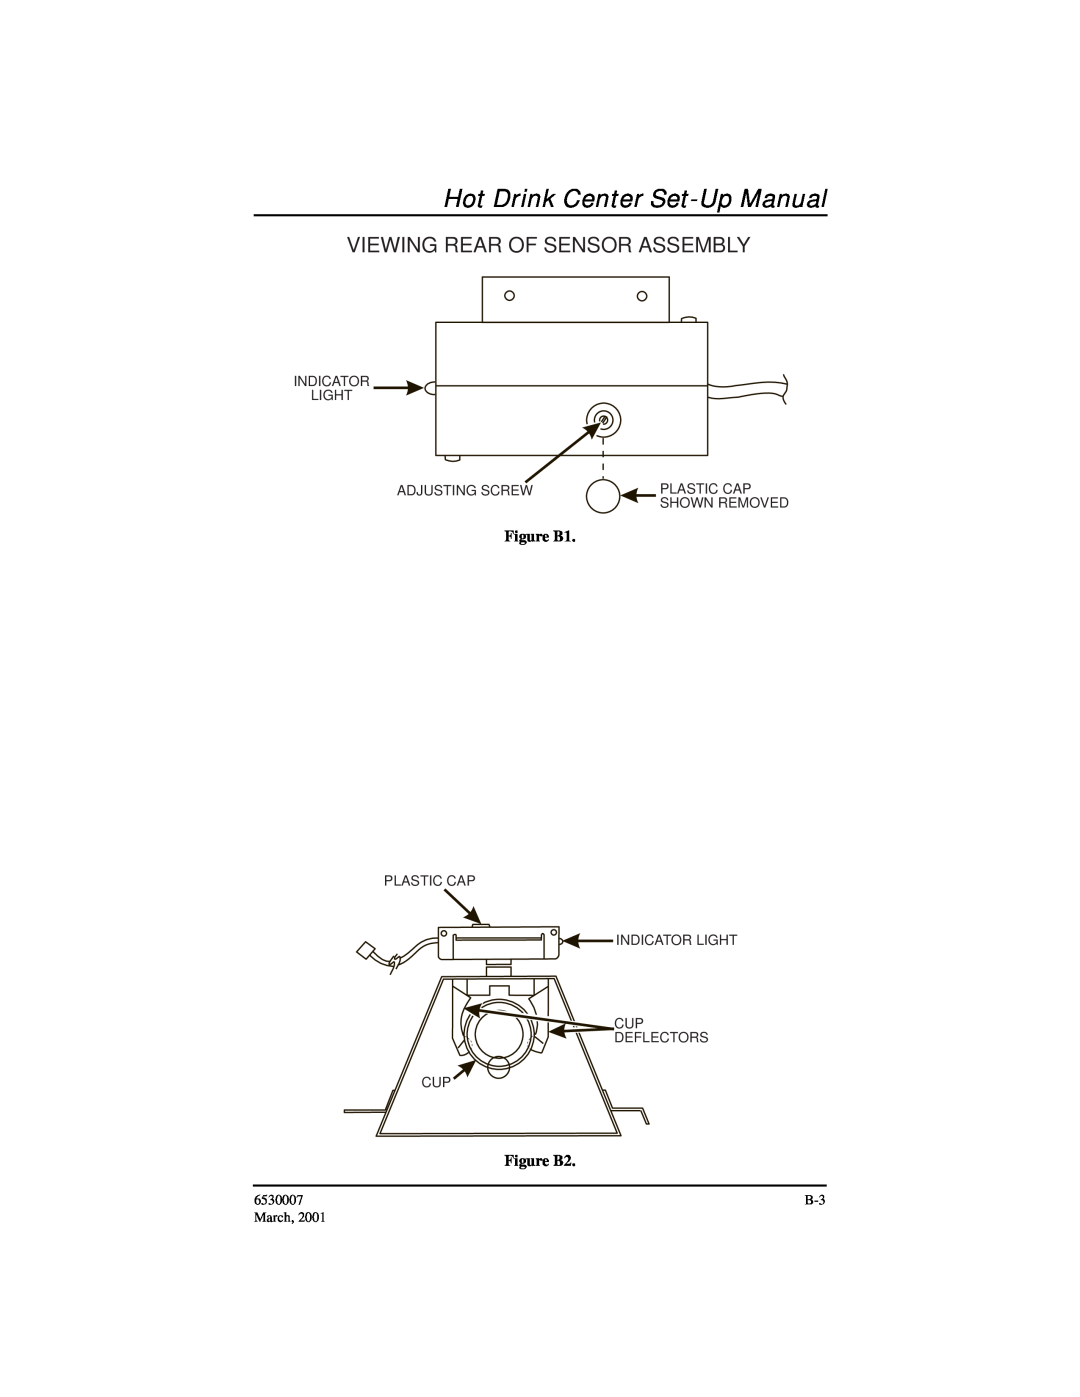 Crane Merchandising Systems 6530006 manual Hot Drink Center Set-Up Manual, Viewing Rear Of Sensor Assembly, Indicator Light 